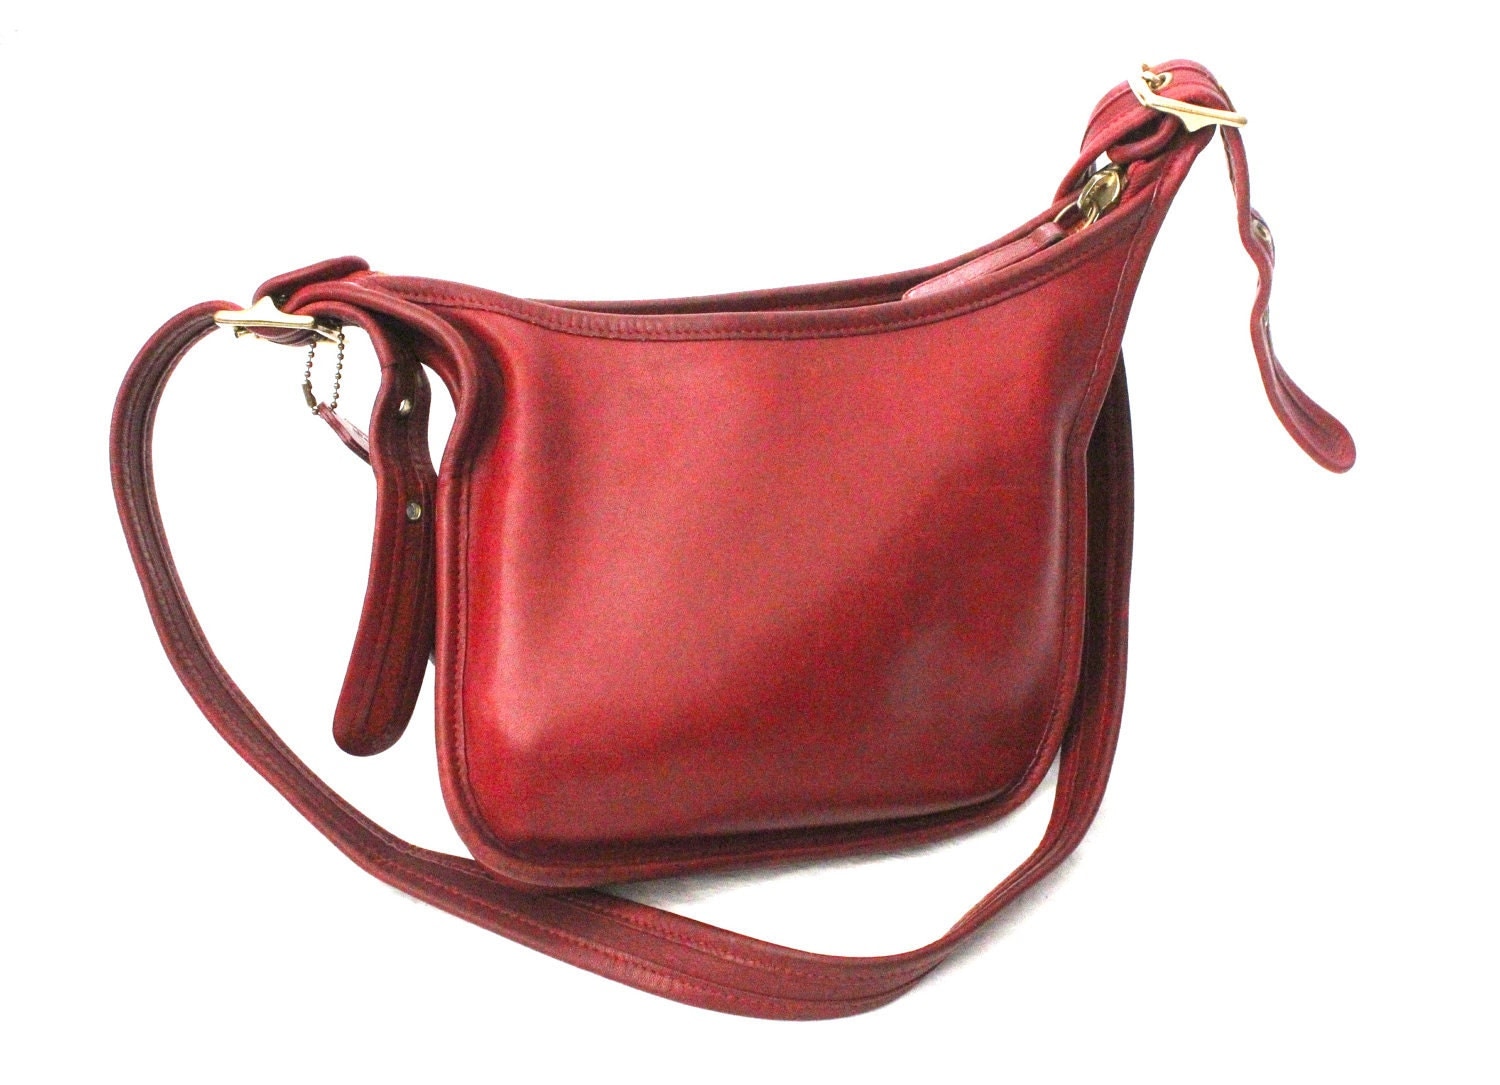 Vintage COACH Red Leather Handbag